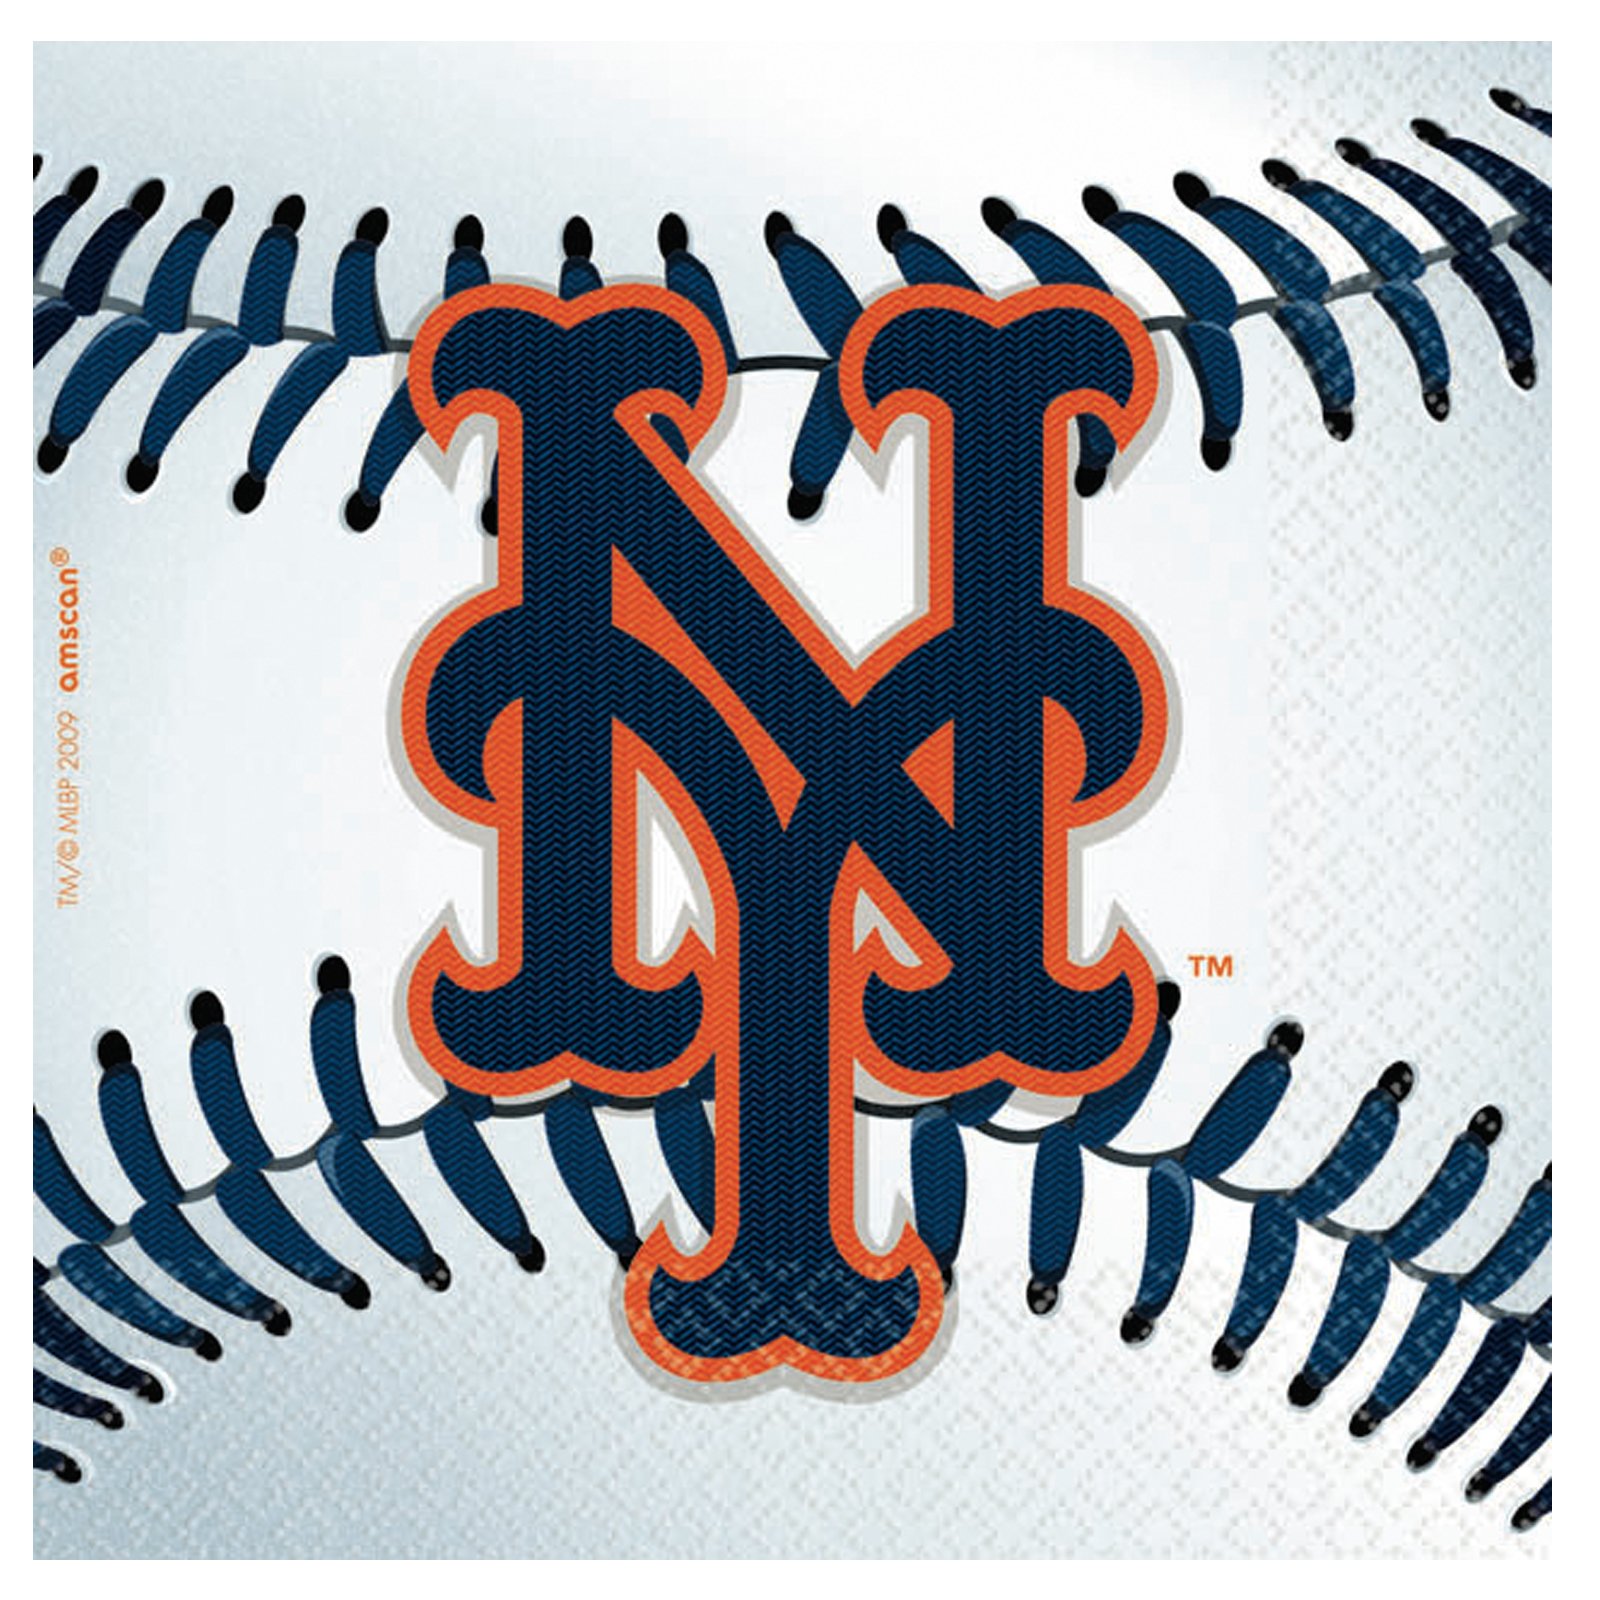 New York Mets Baseball - Beverage Napkins (36 count)